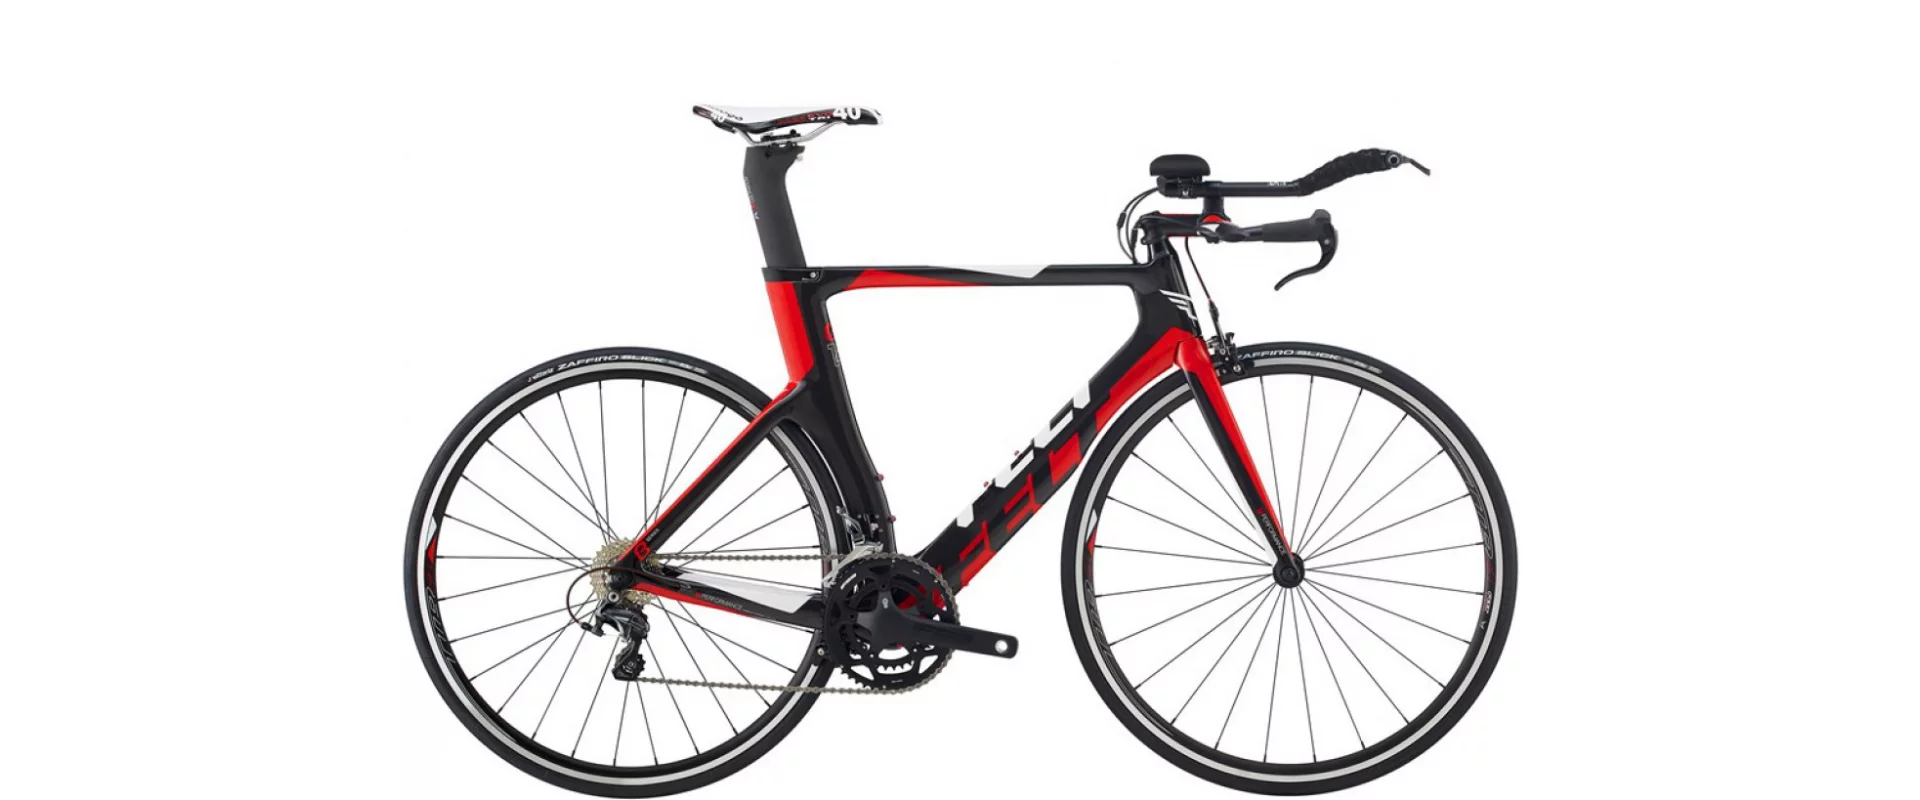 FELT B14 Carbon (Red, White) / Велосипед для триатлона